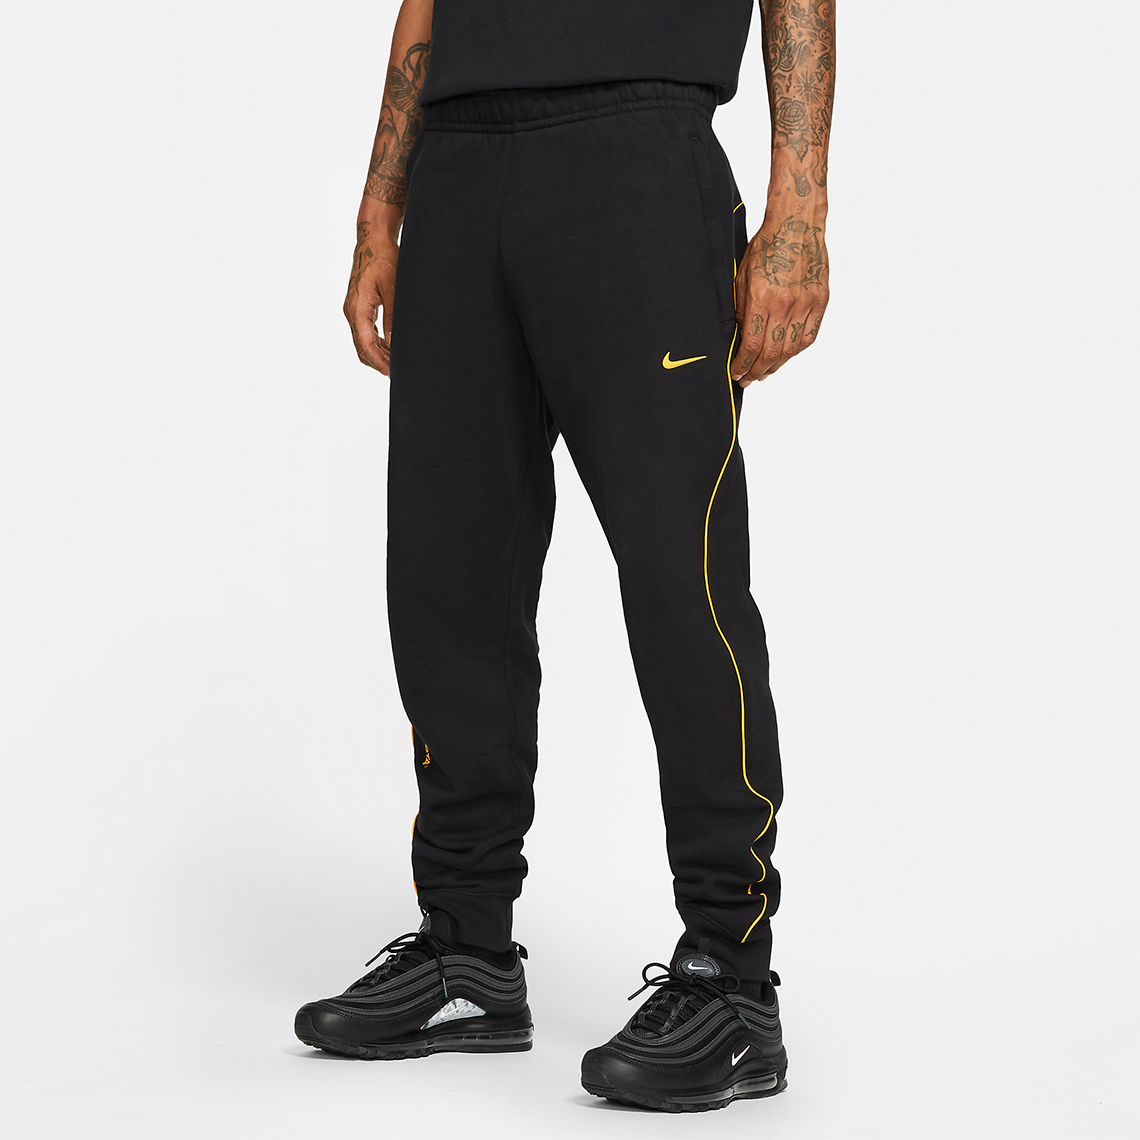 Drake Nike Nocta Pants Black Da3935 010 1